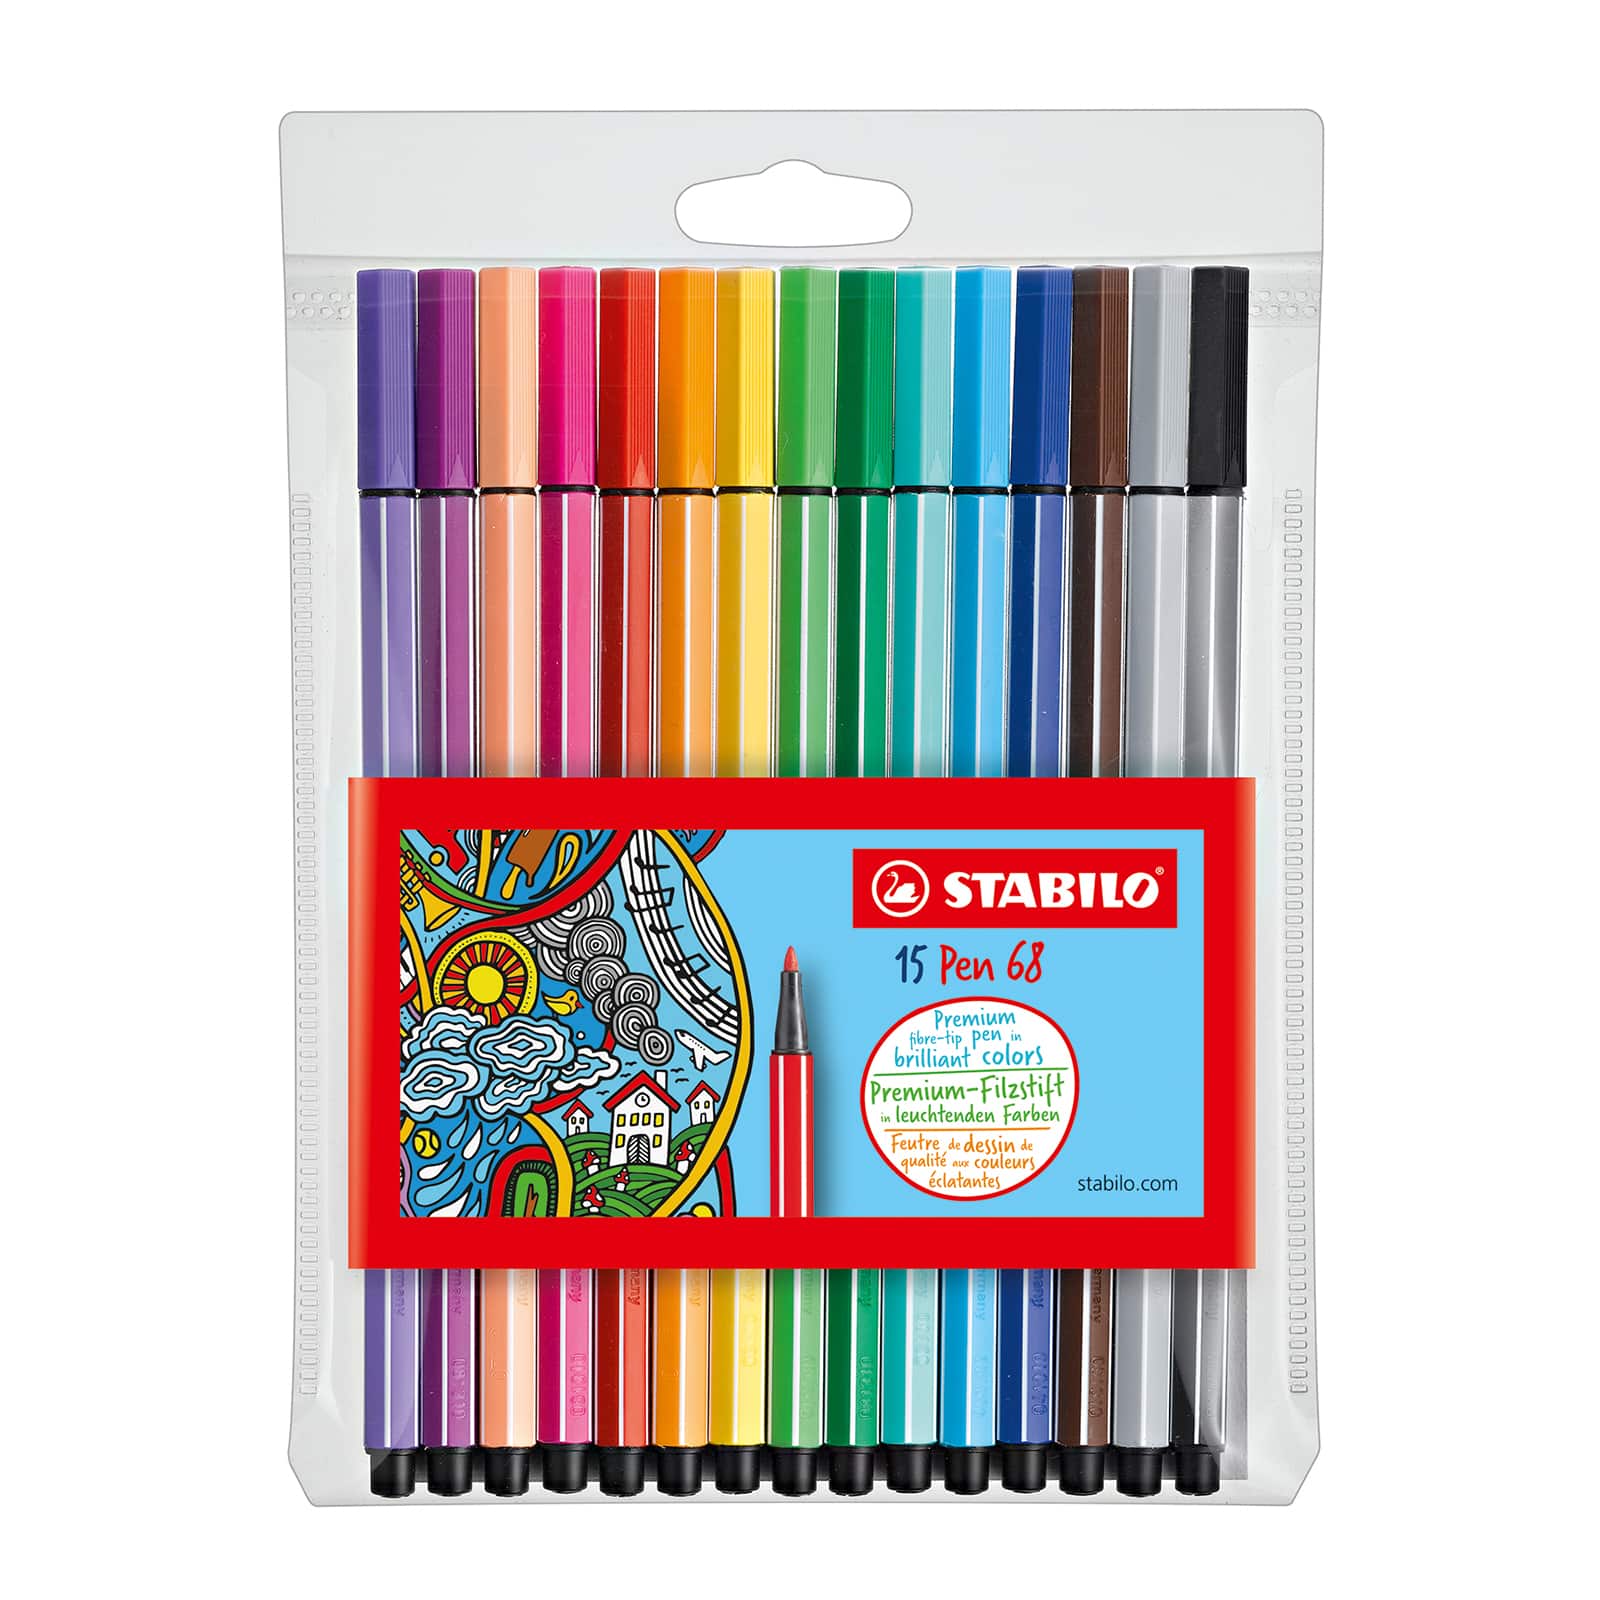  Premium Felt Tip Pen - STABILO Pen 68 - Wallet of 30 - Assorted  colors incl 6 Neon : Office Products